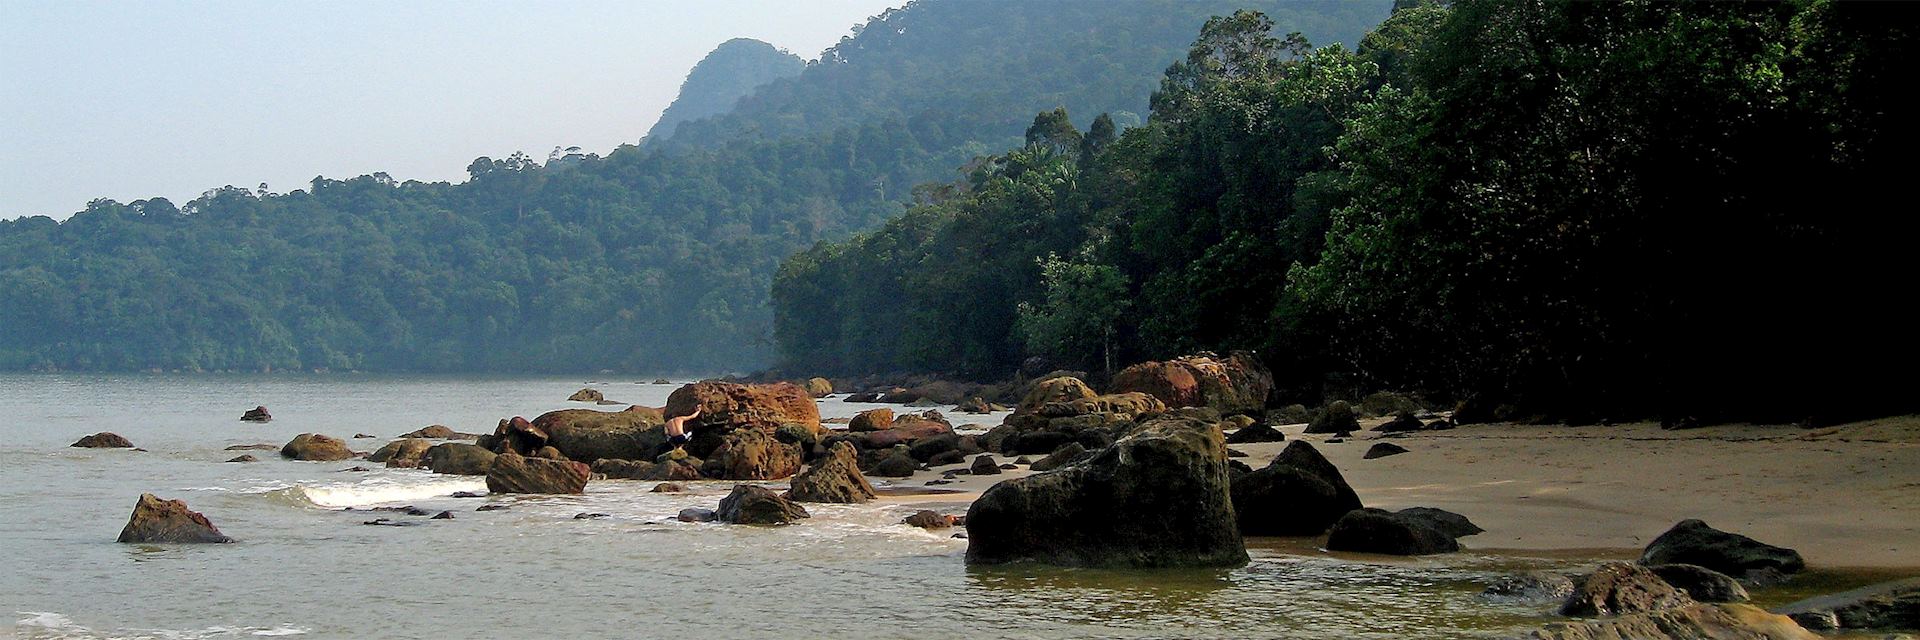 Damai Peninsula, Malaysian Borneo